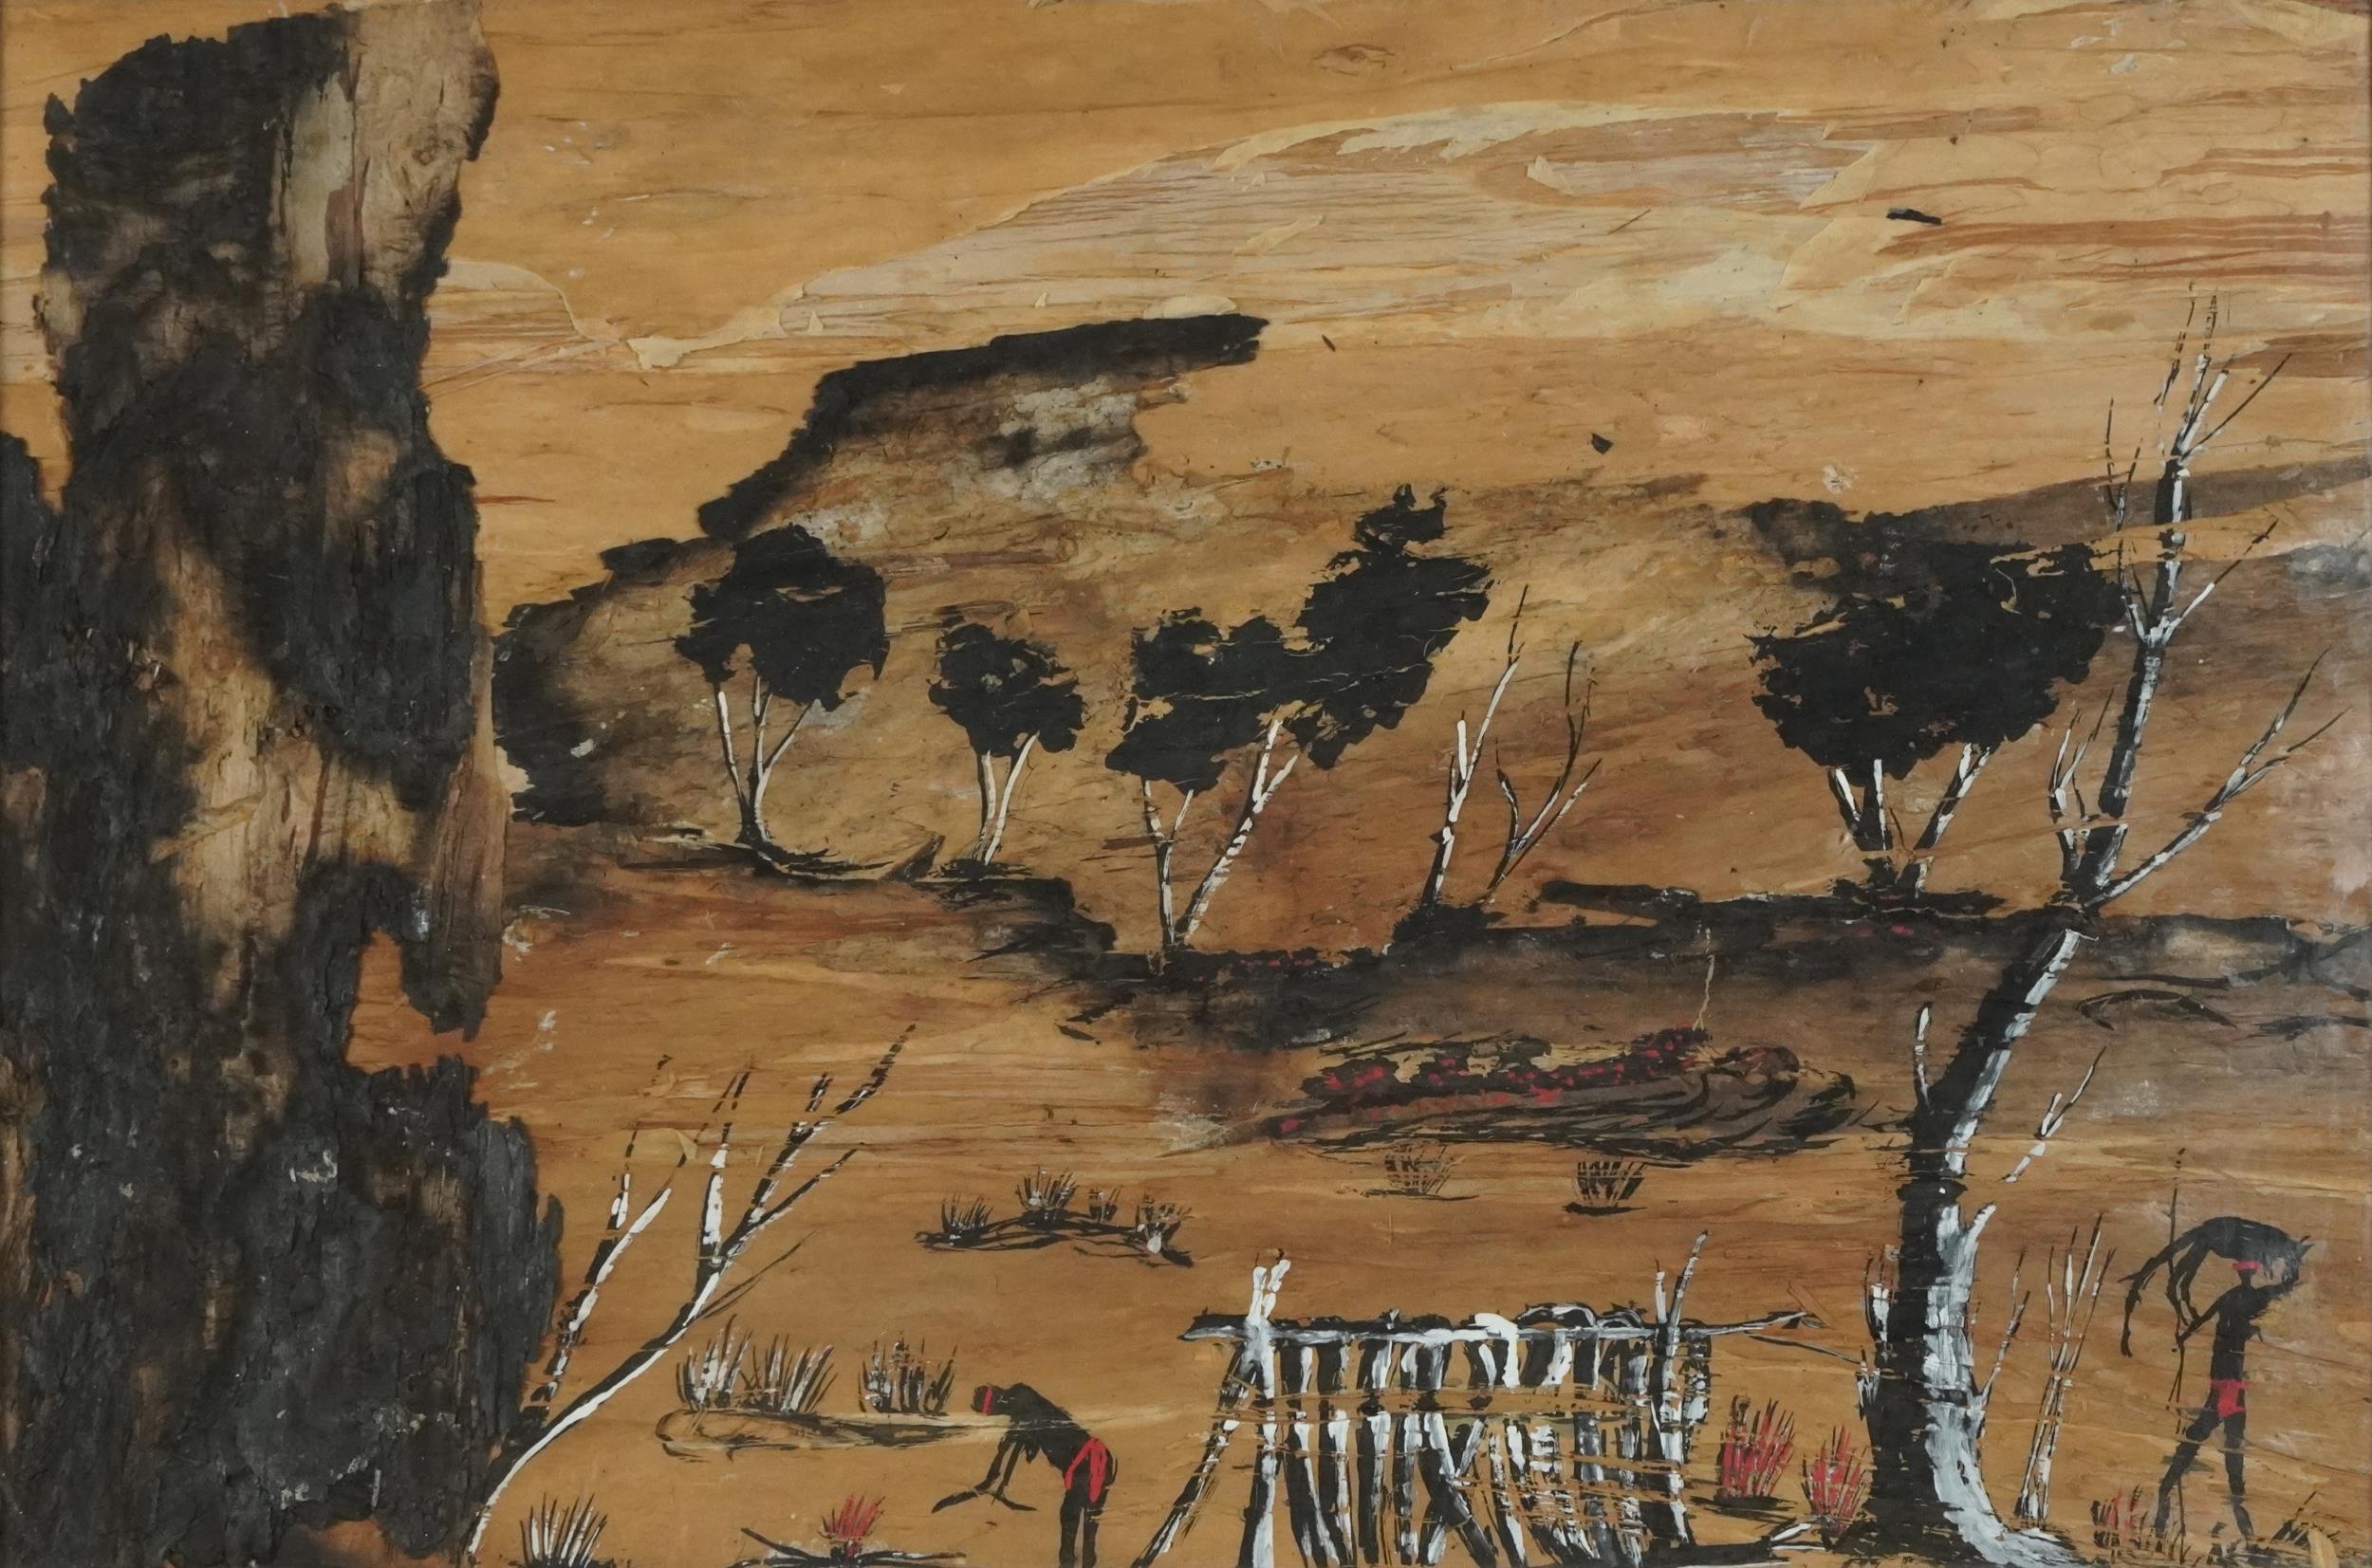 Australian landscape with Aboriginals, Aborigine Western Australian school painting on panel, labels